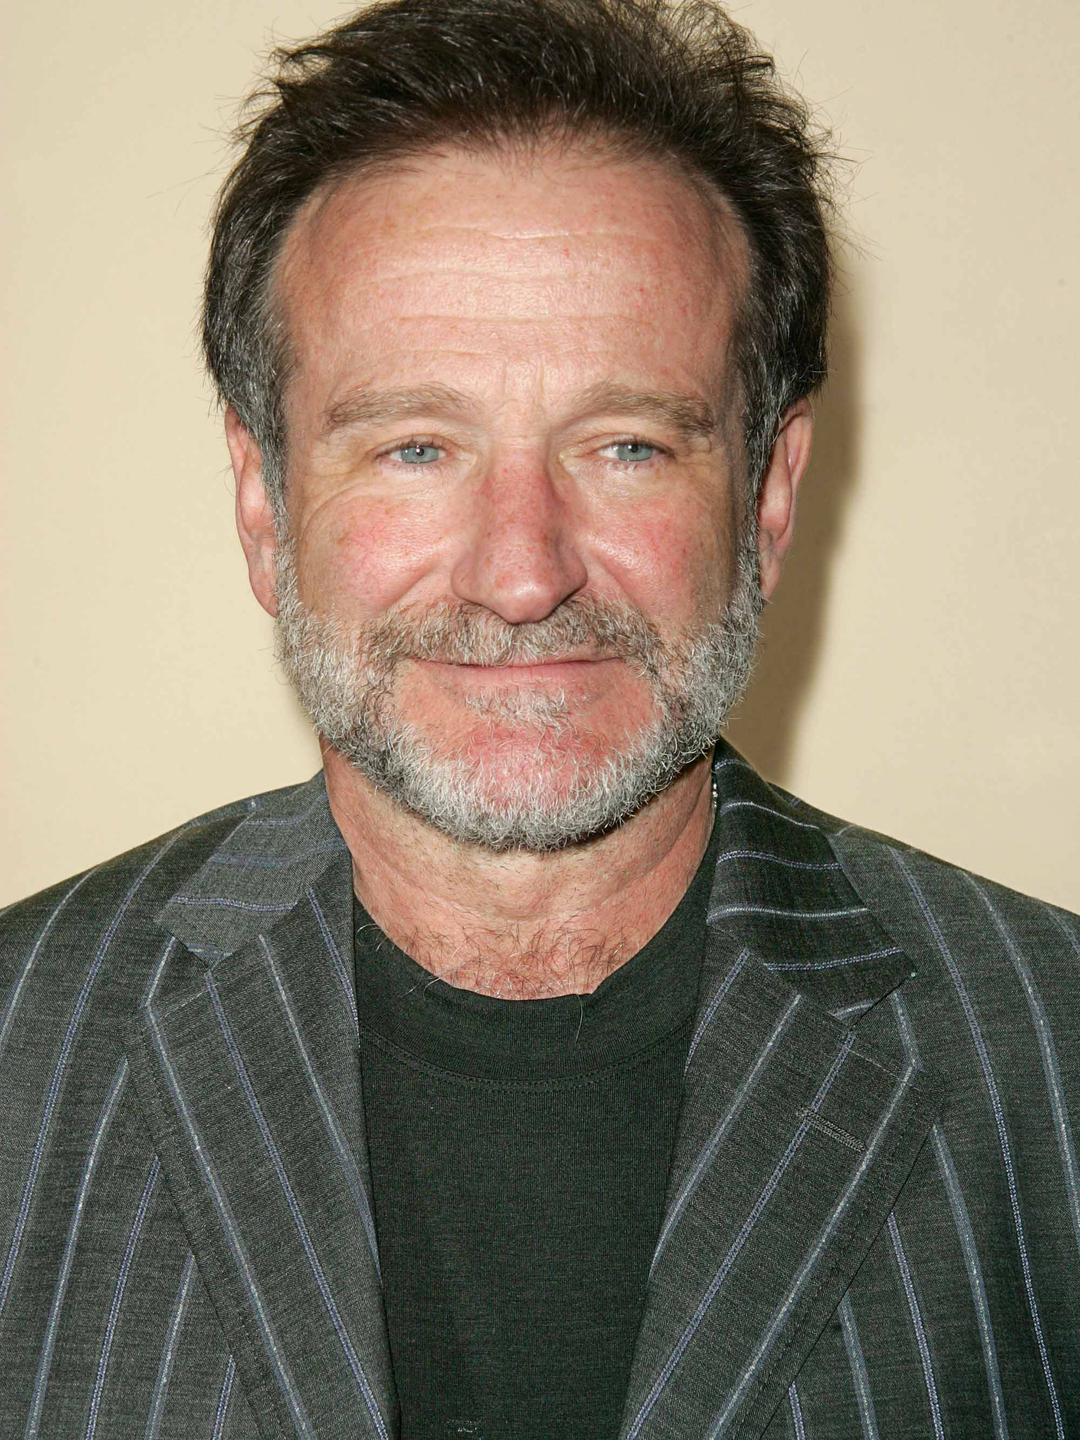 Robin Williams ethnicity